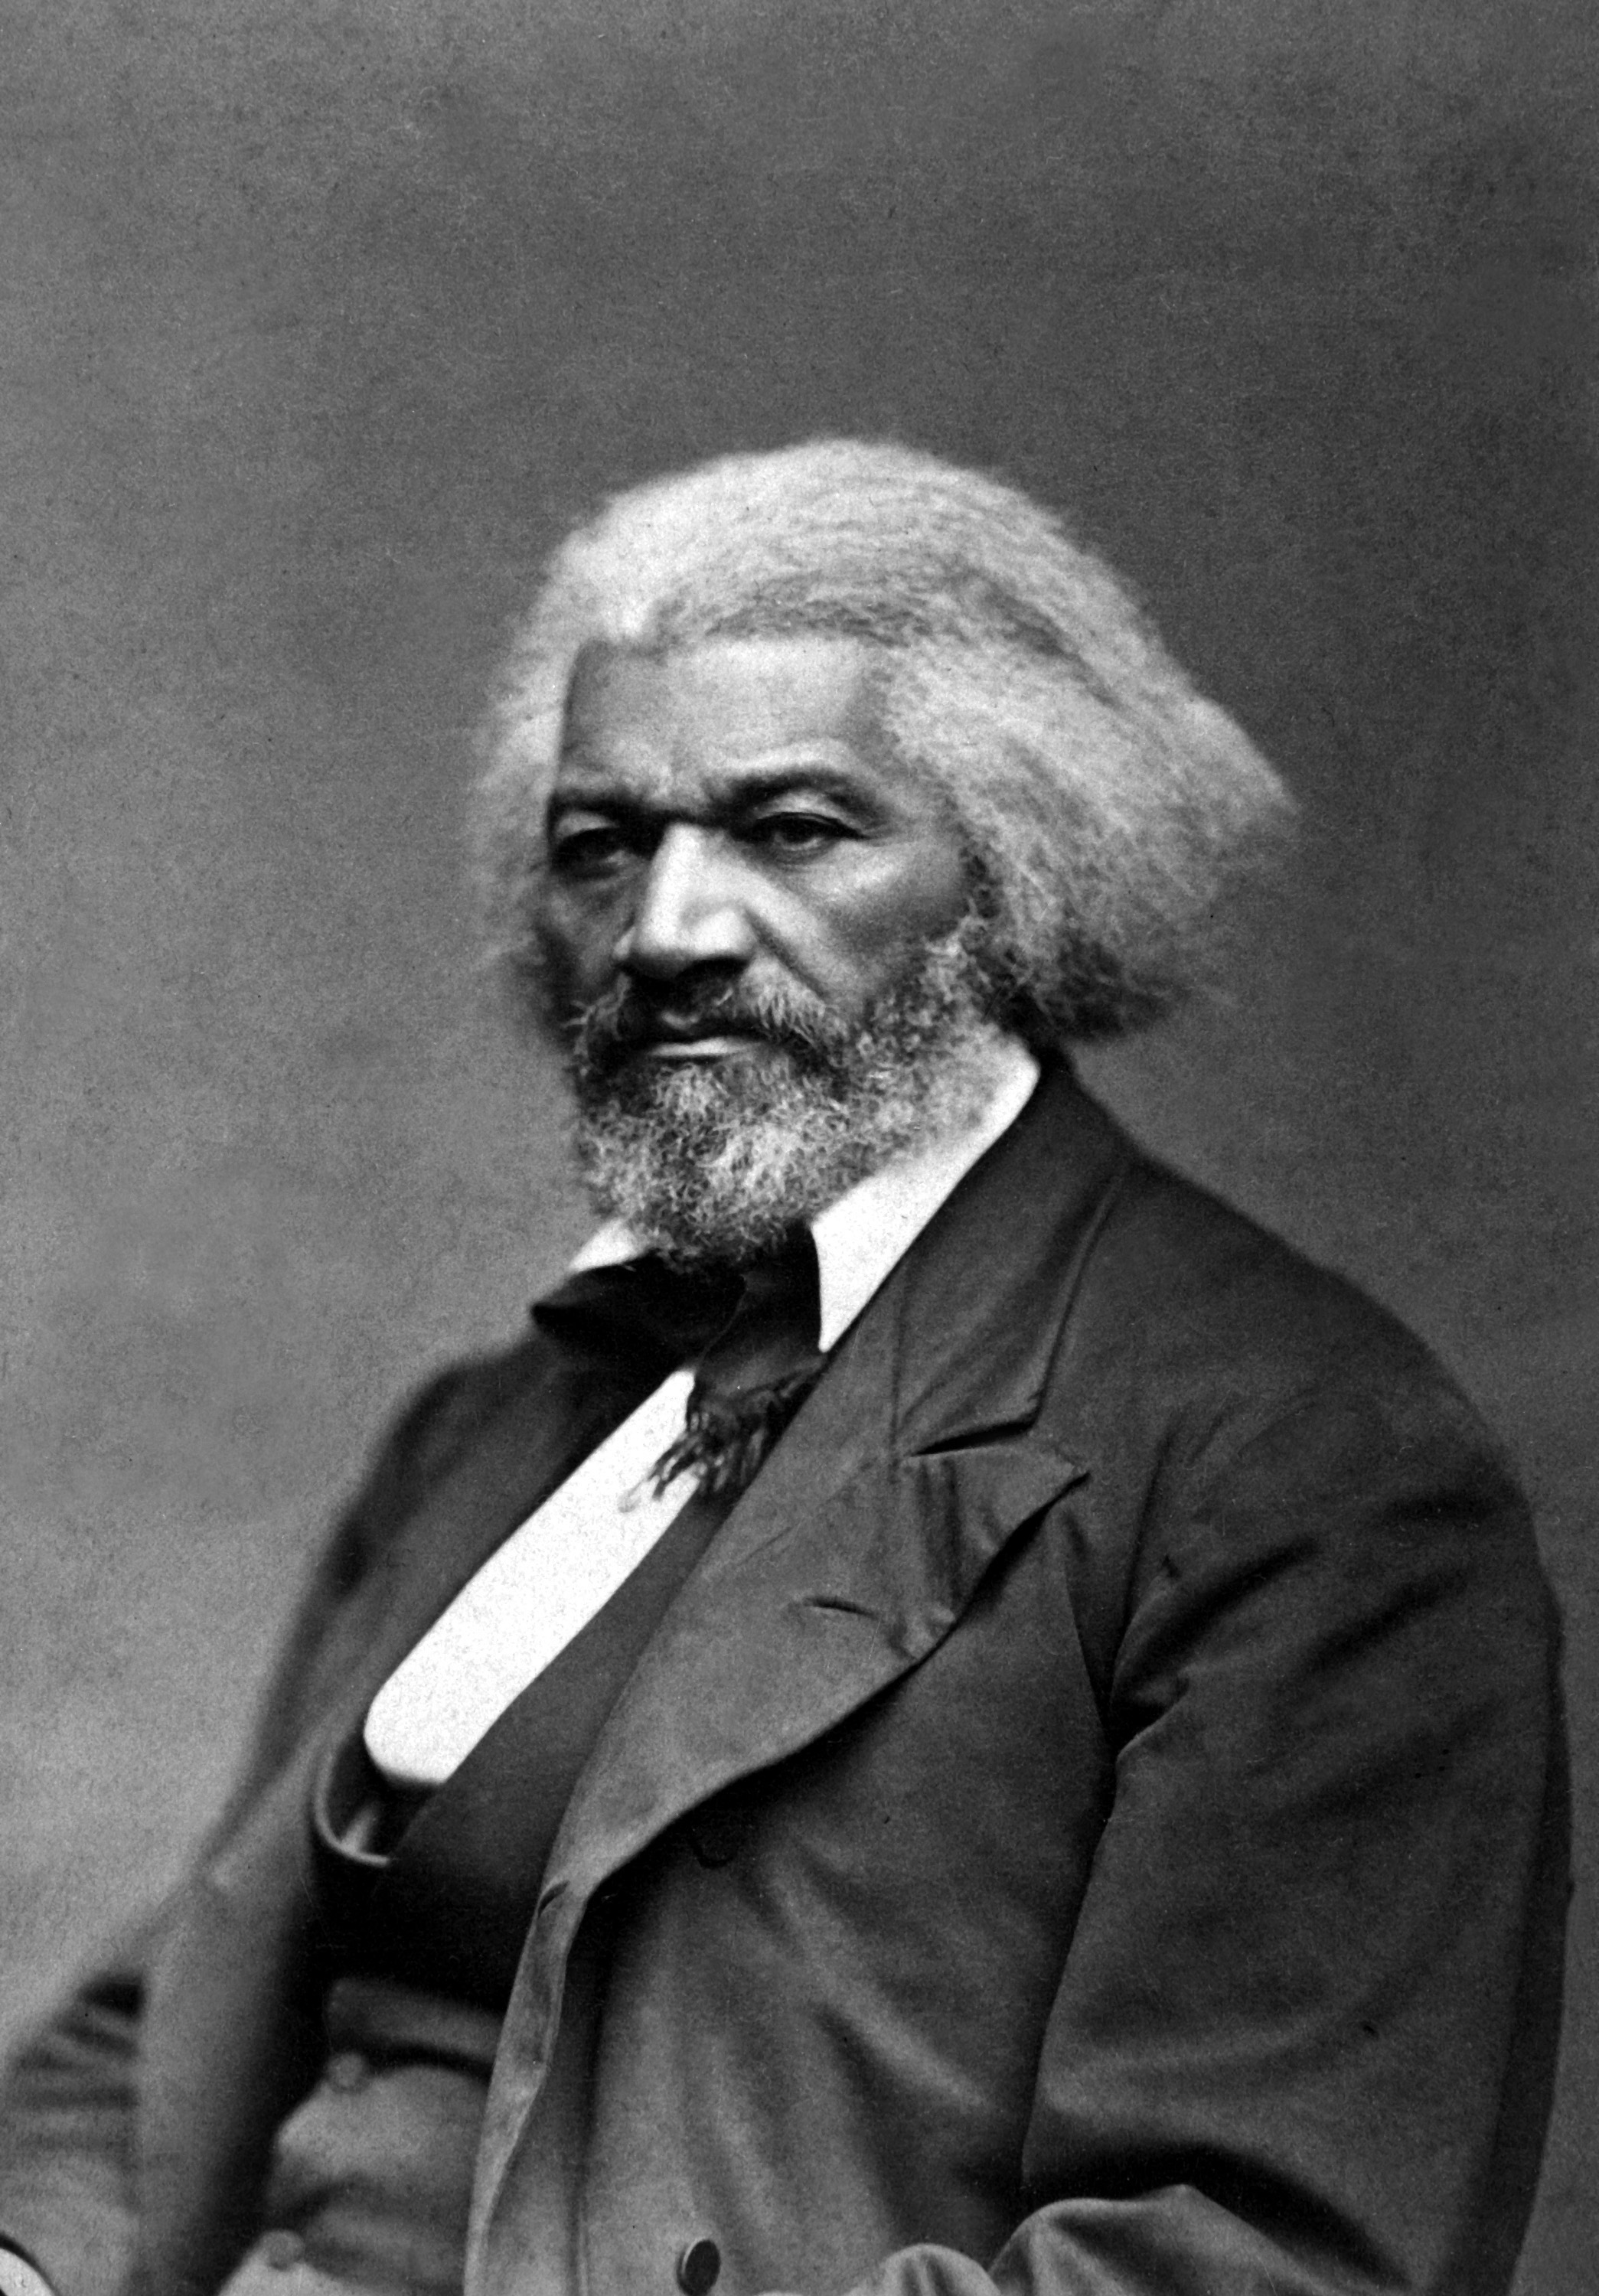 1879 portrait photograph of Frederick Douglass